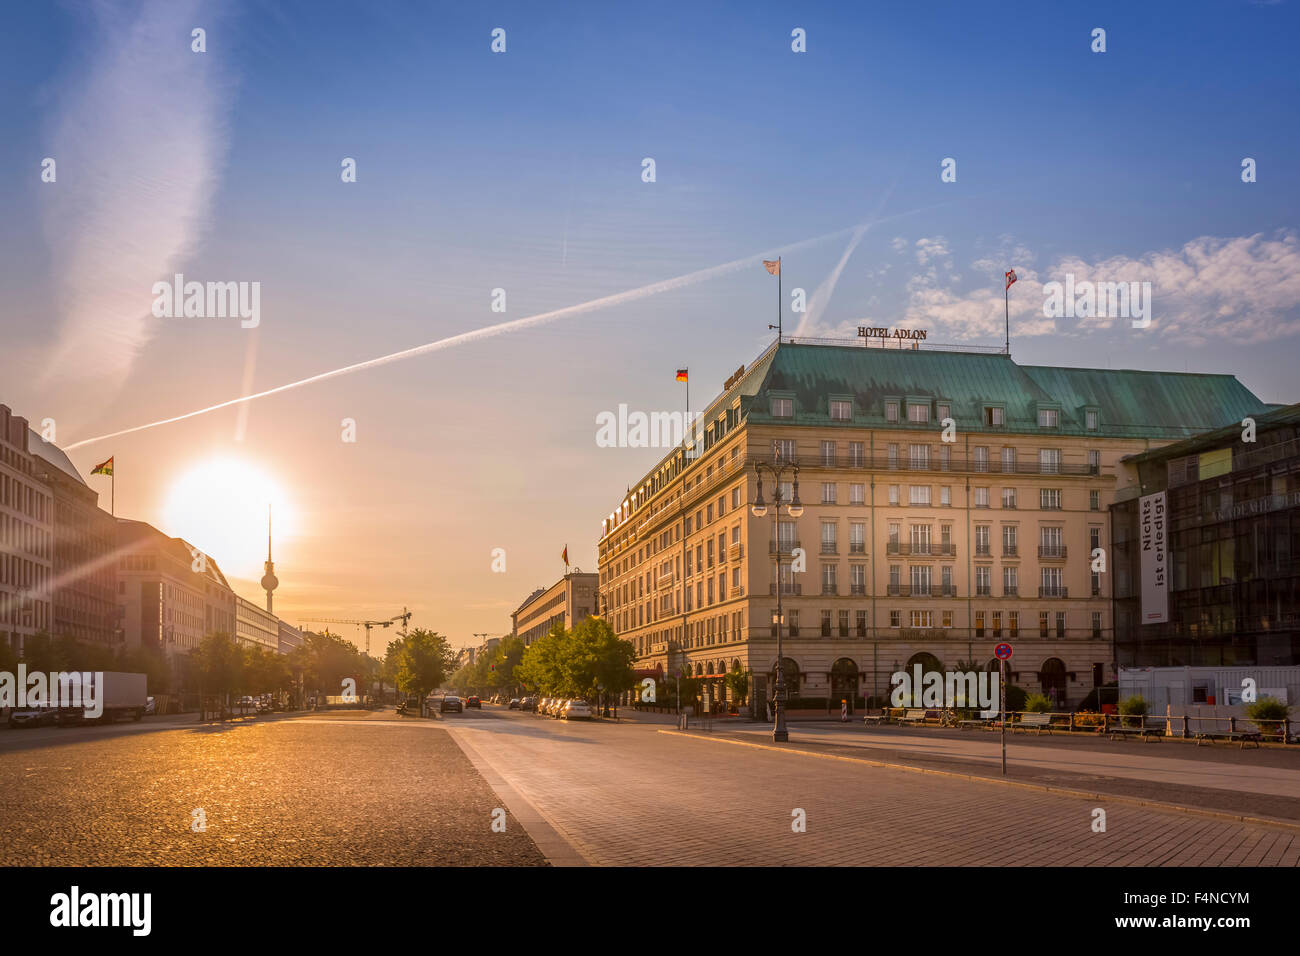 Germany, Berlin, Hotel Adlon at Pariser Platz during Sunrise Stock Photo